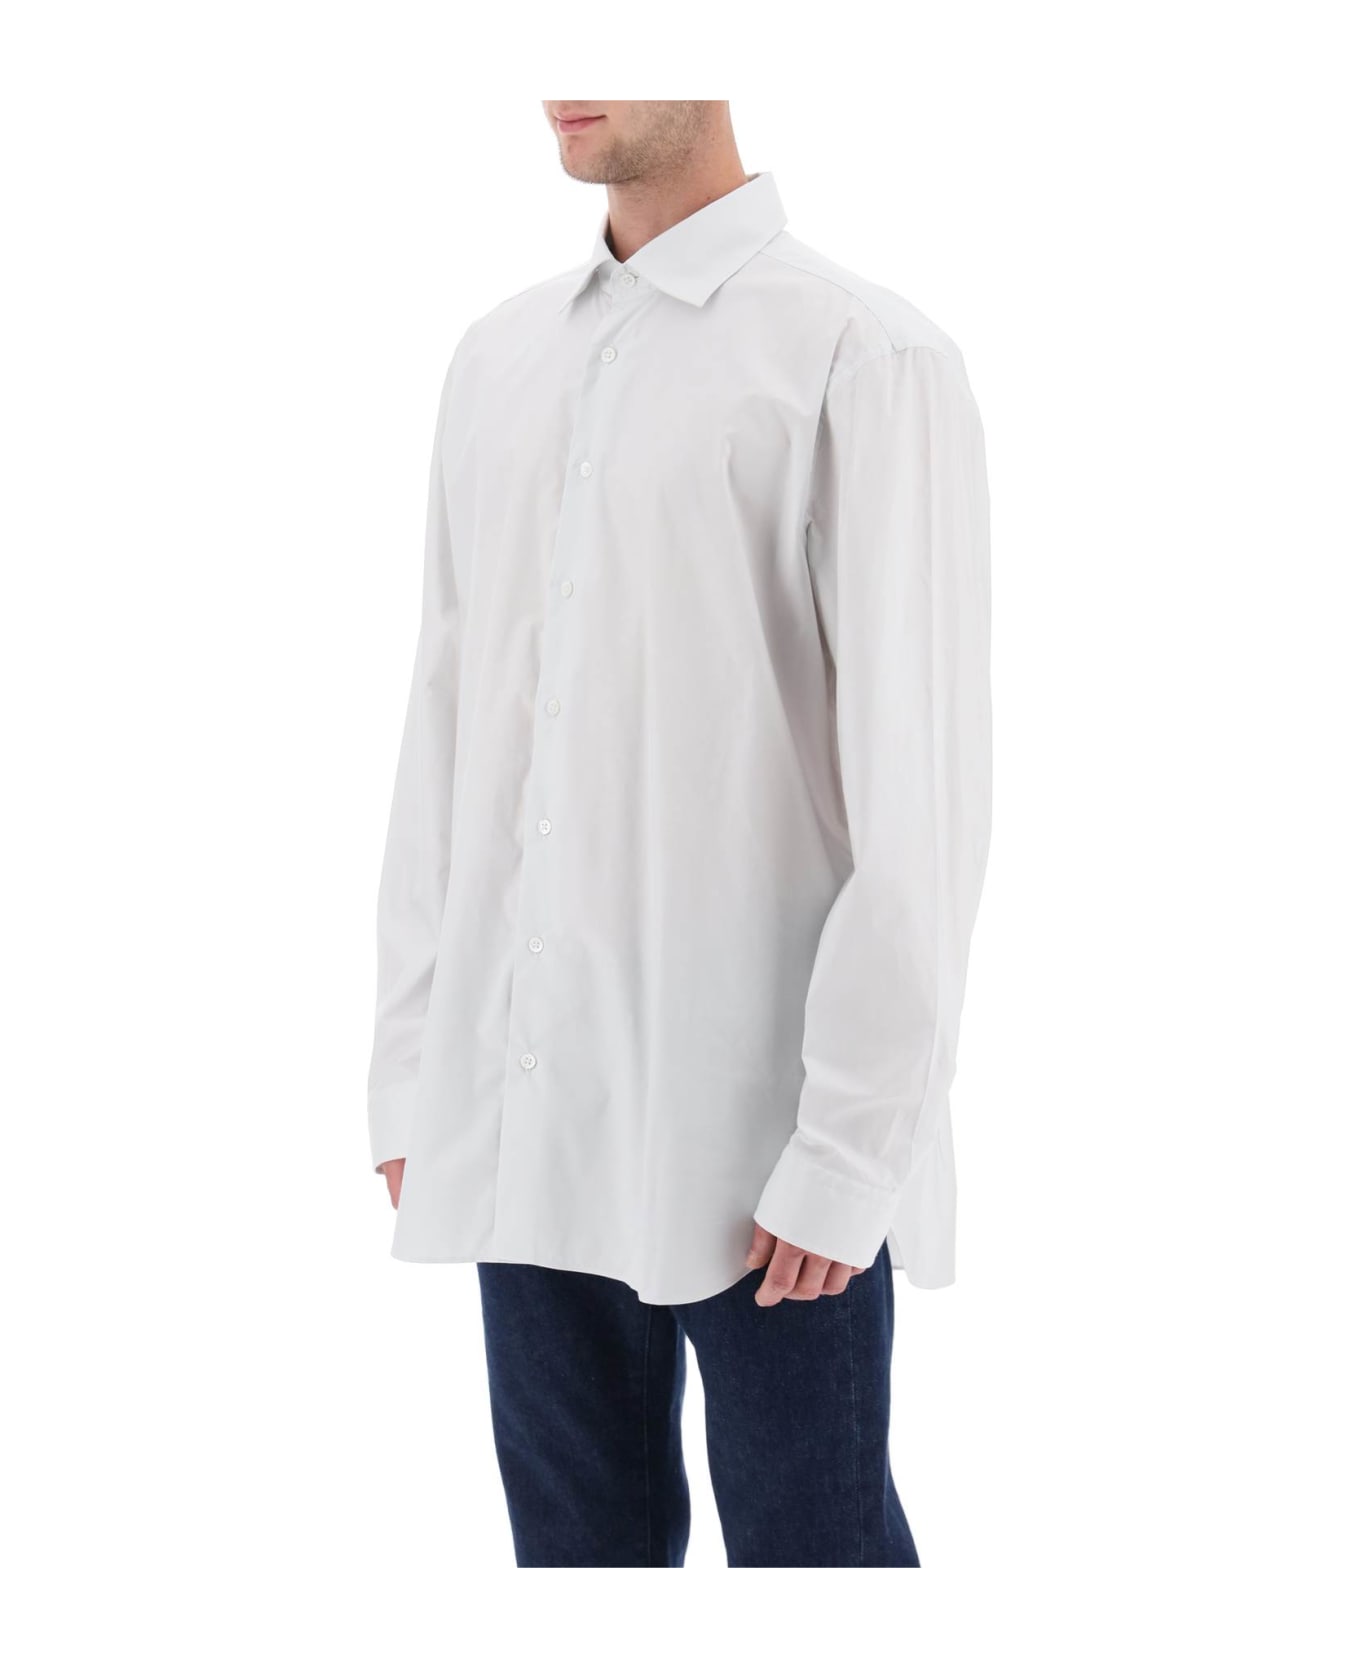 Raf Simons Philippe Vandenberg Printed Shirt - PEARL (White)